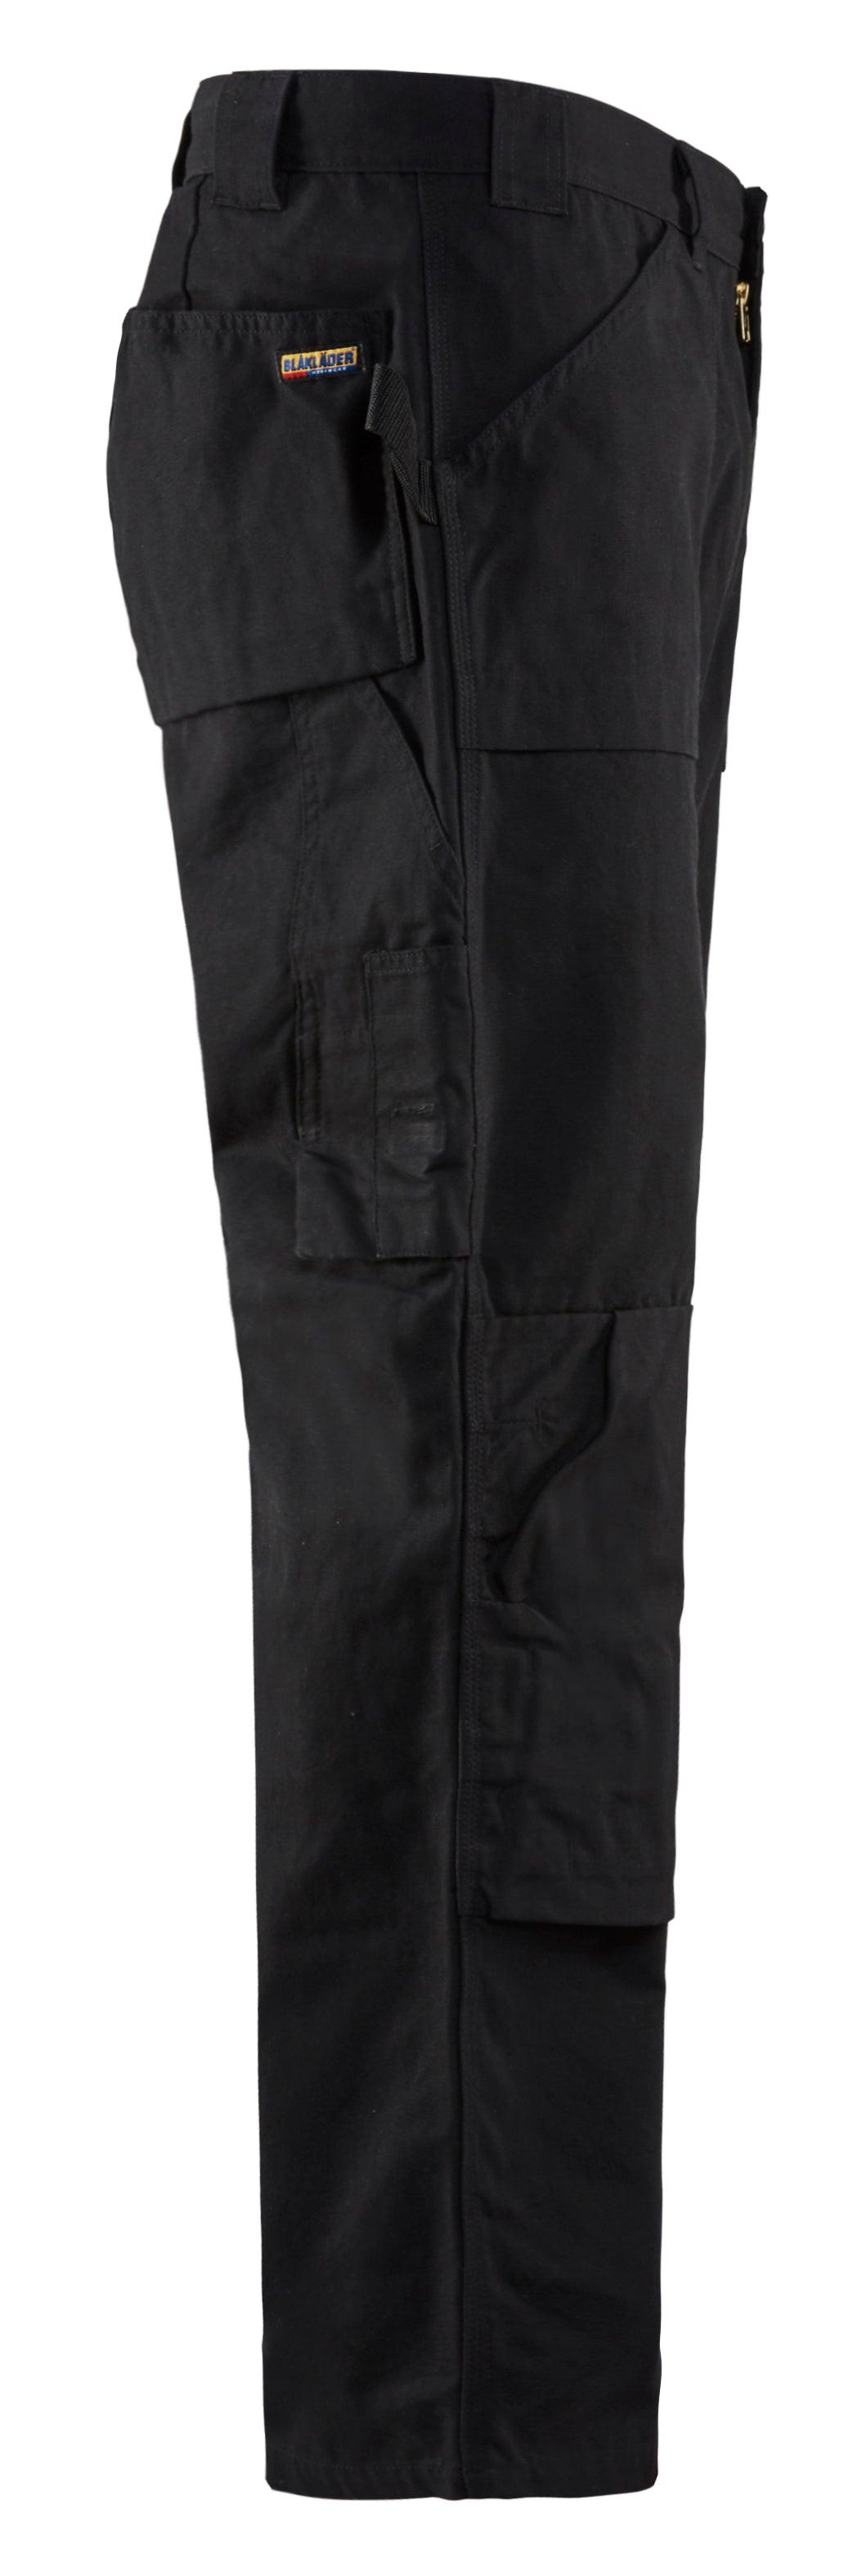 Blaklader 1670 8oz Bantam Work Pants - Black - Trusted Gear Company LLC